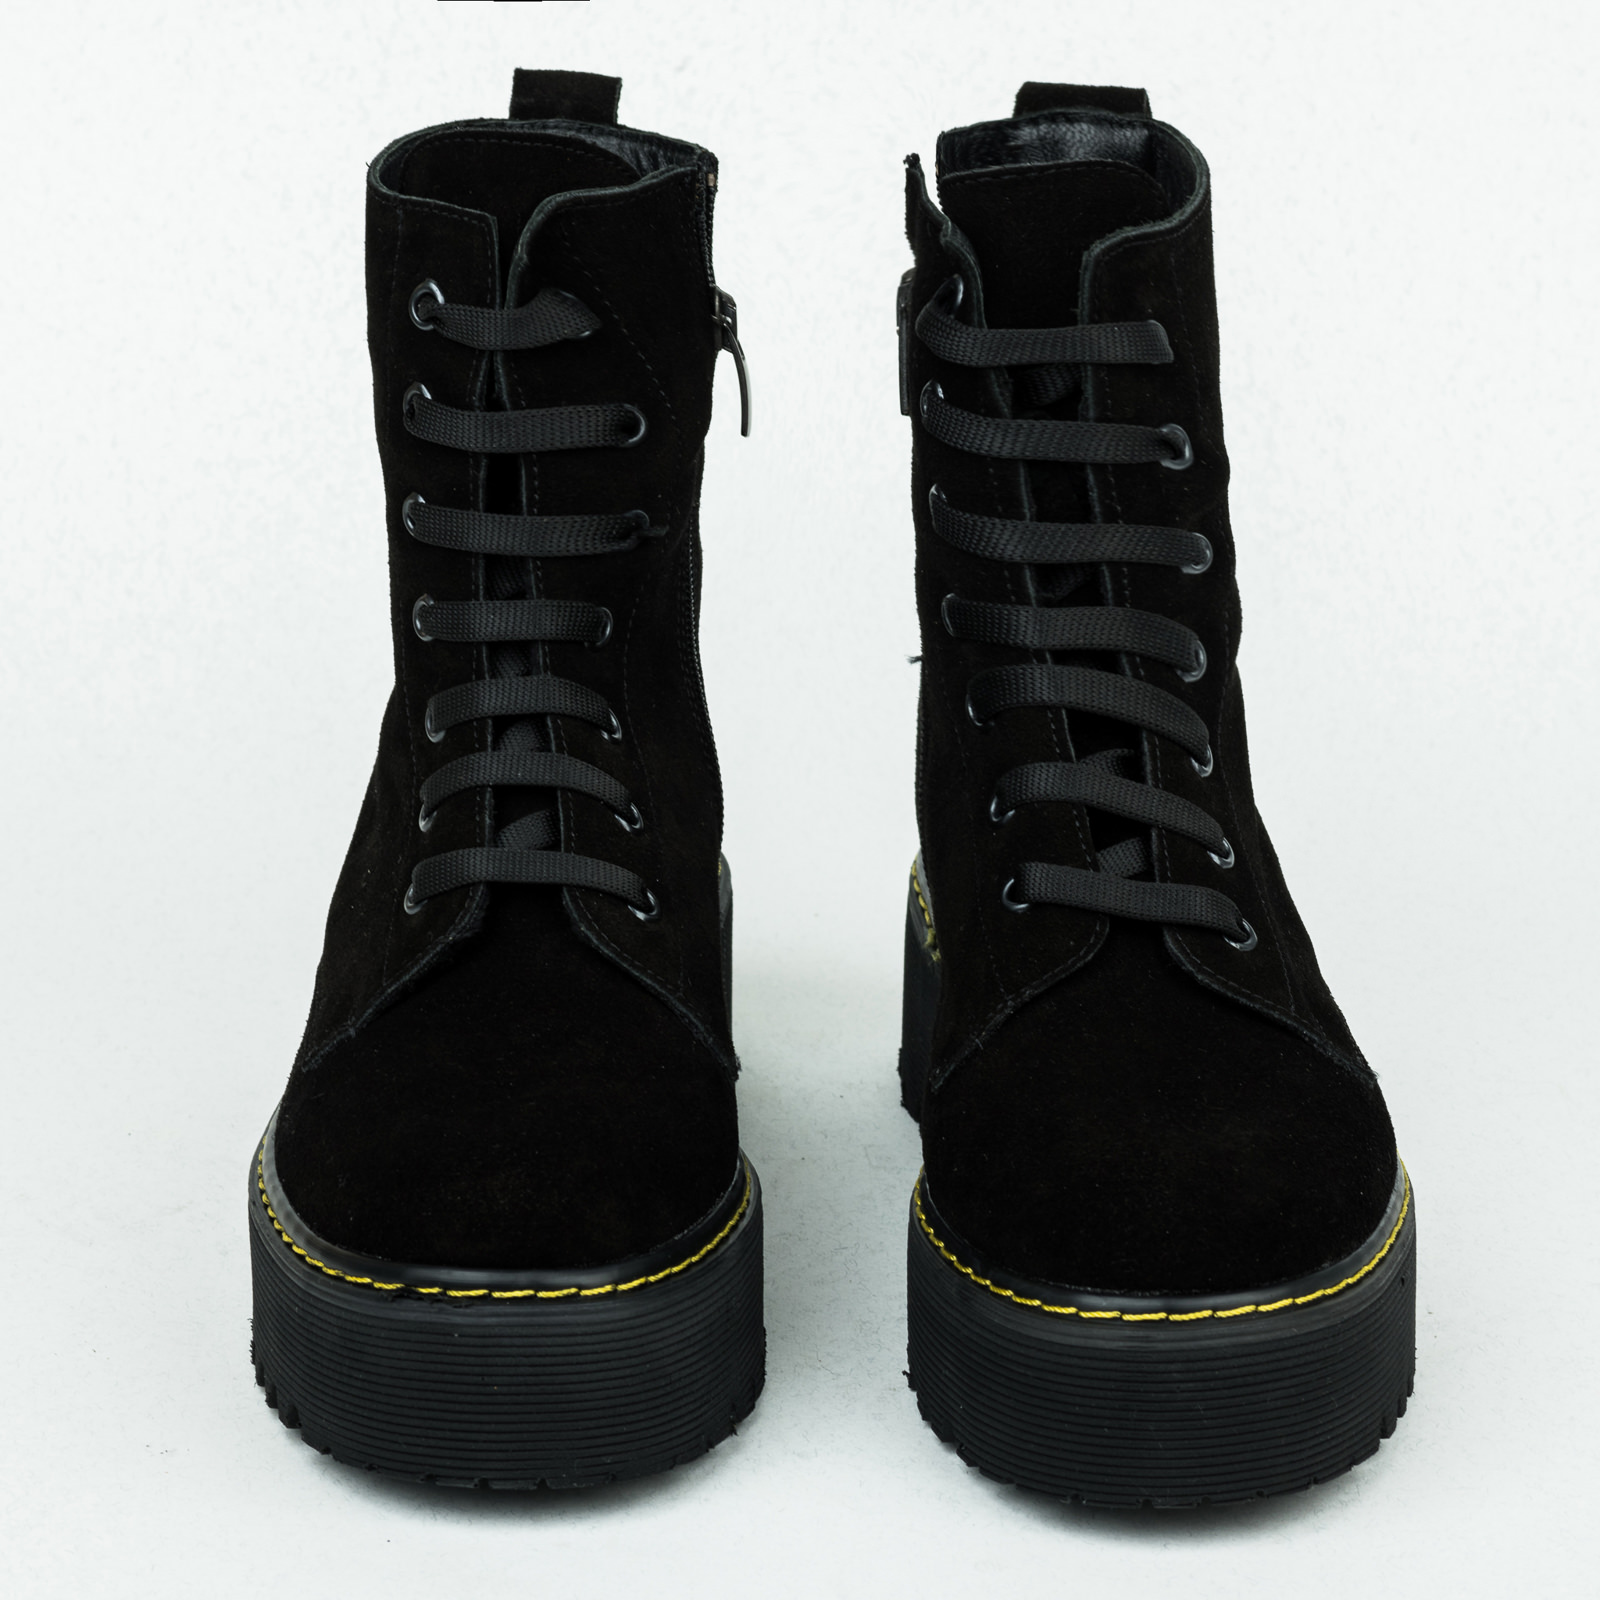 Leather WATERPROOF boots B206 - BLACK